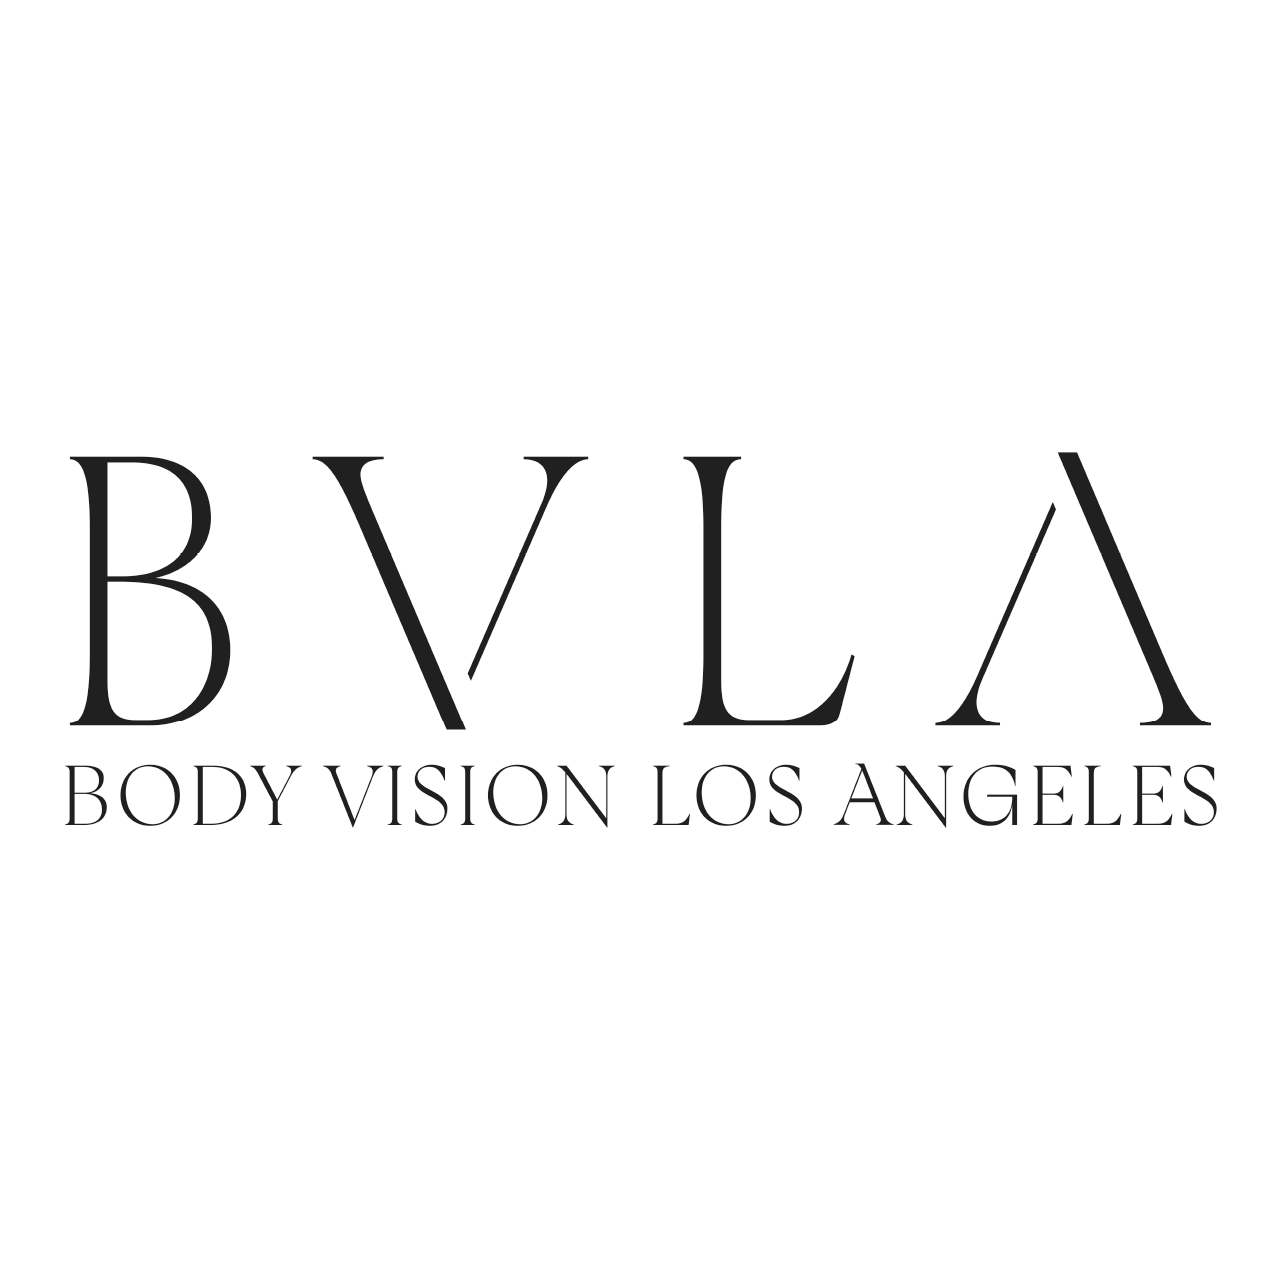 Body Vision Los Angeles